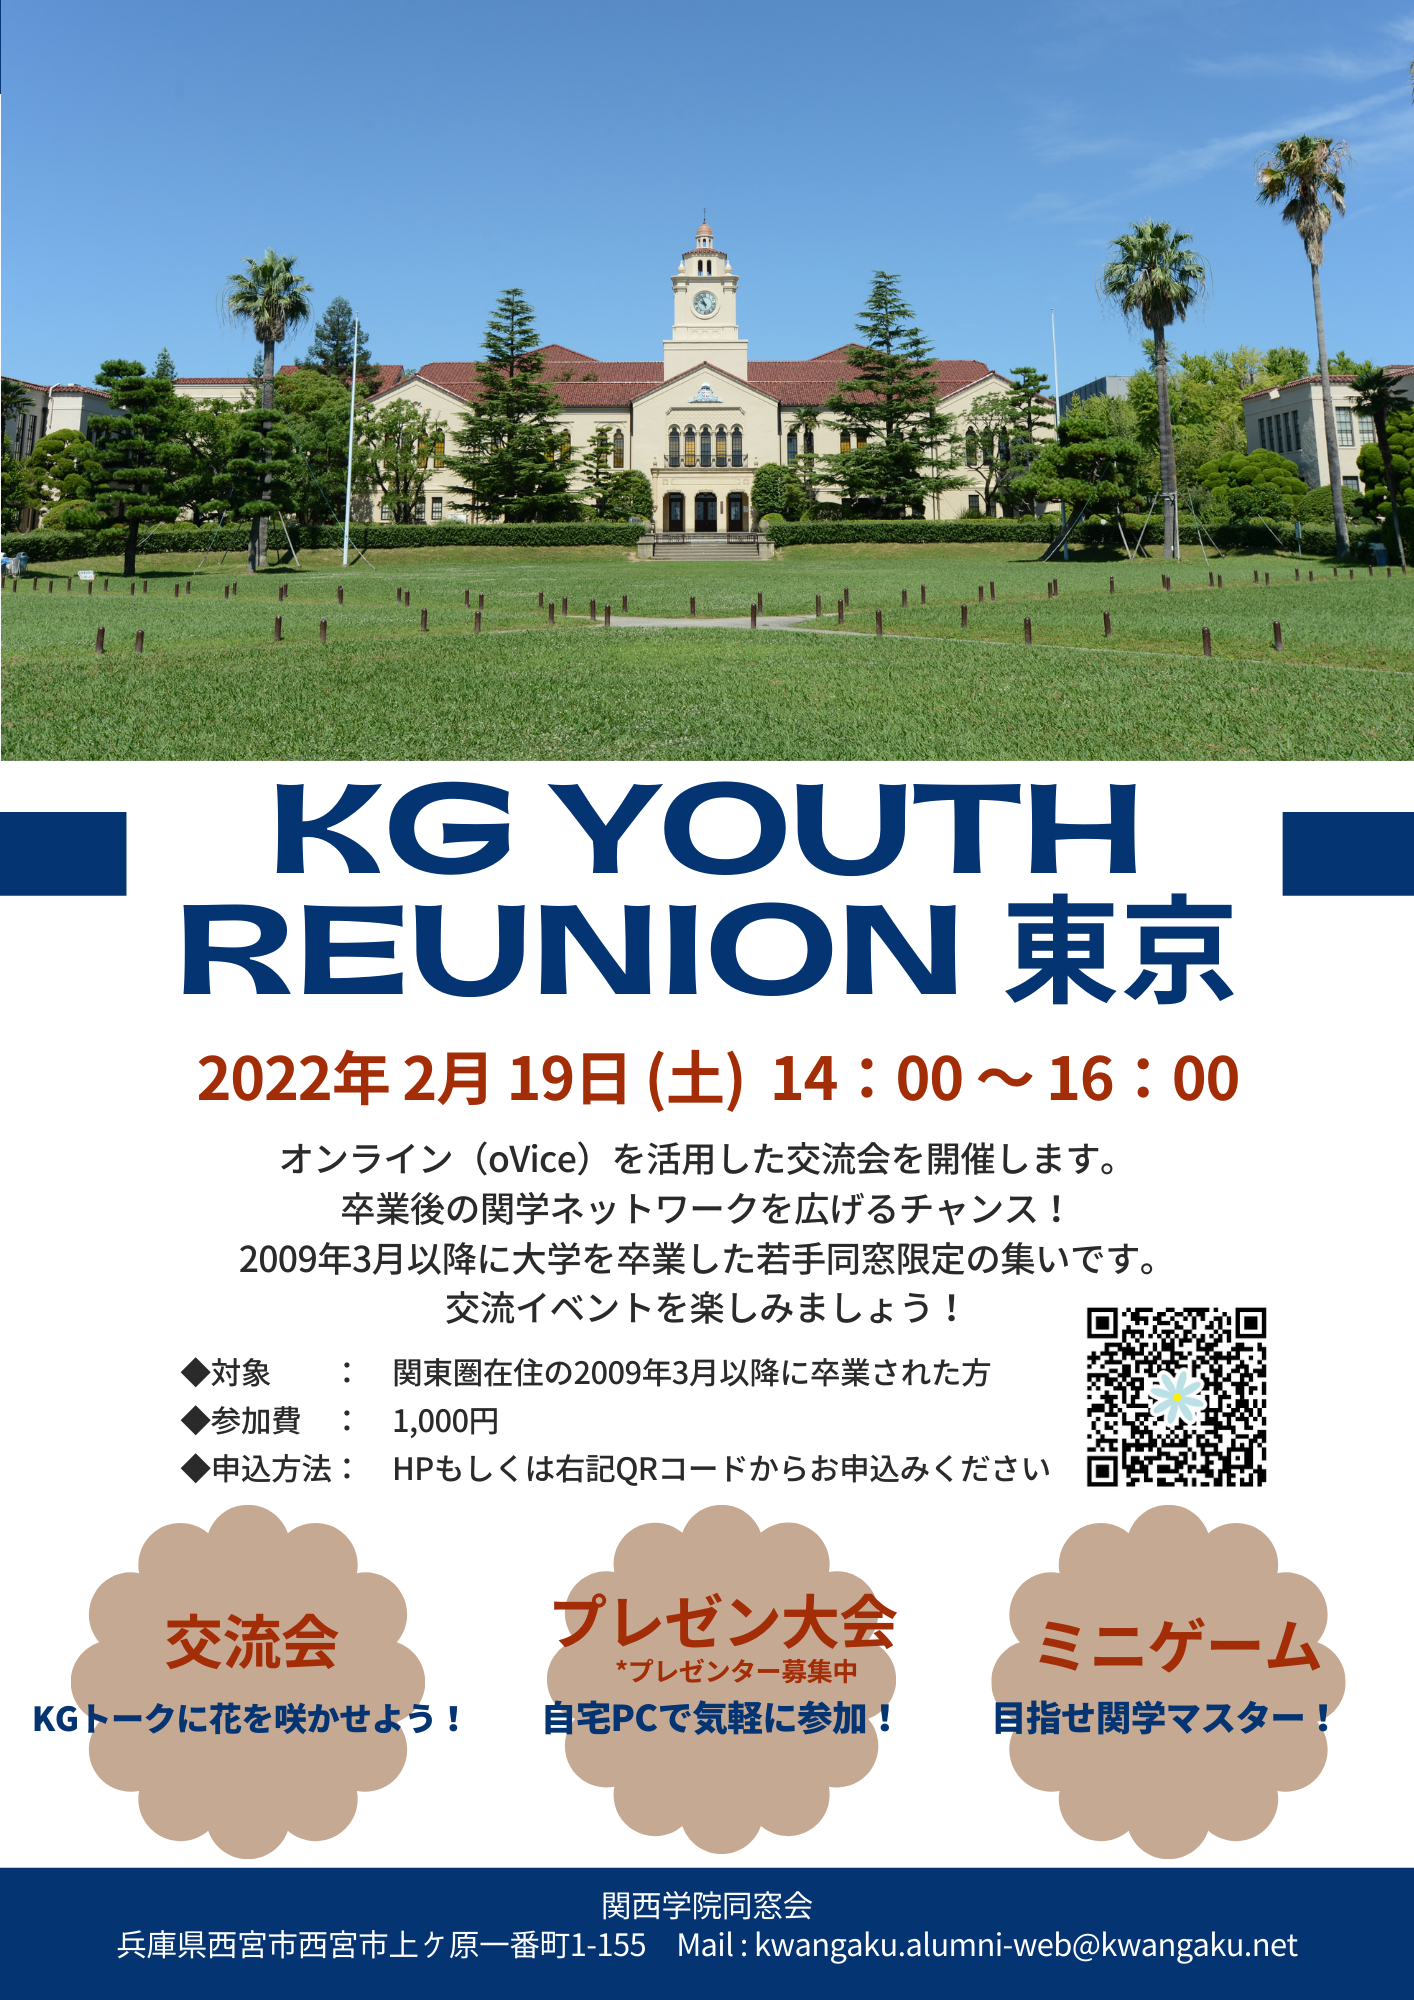 Youth Reunion東京開催のお知らせ